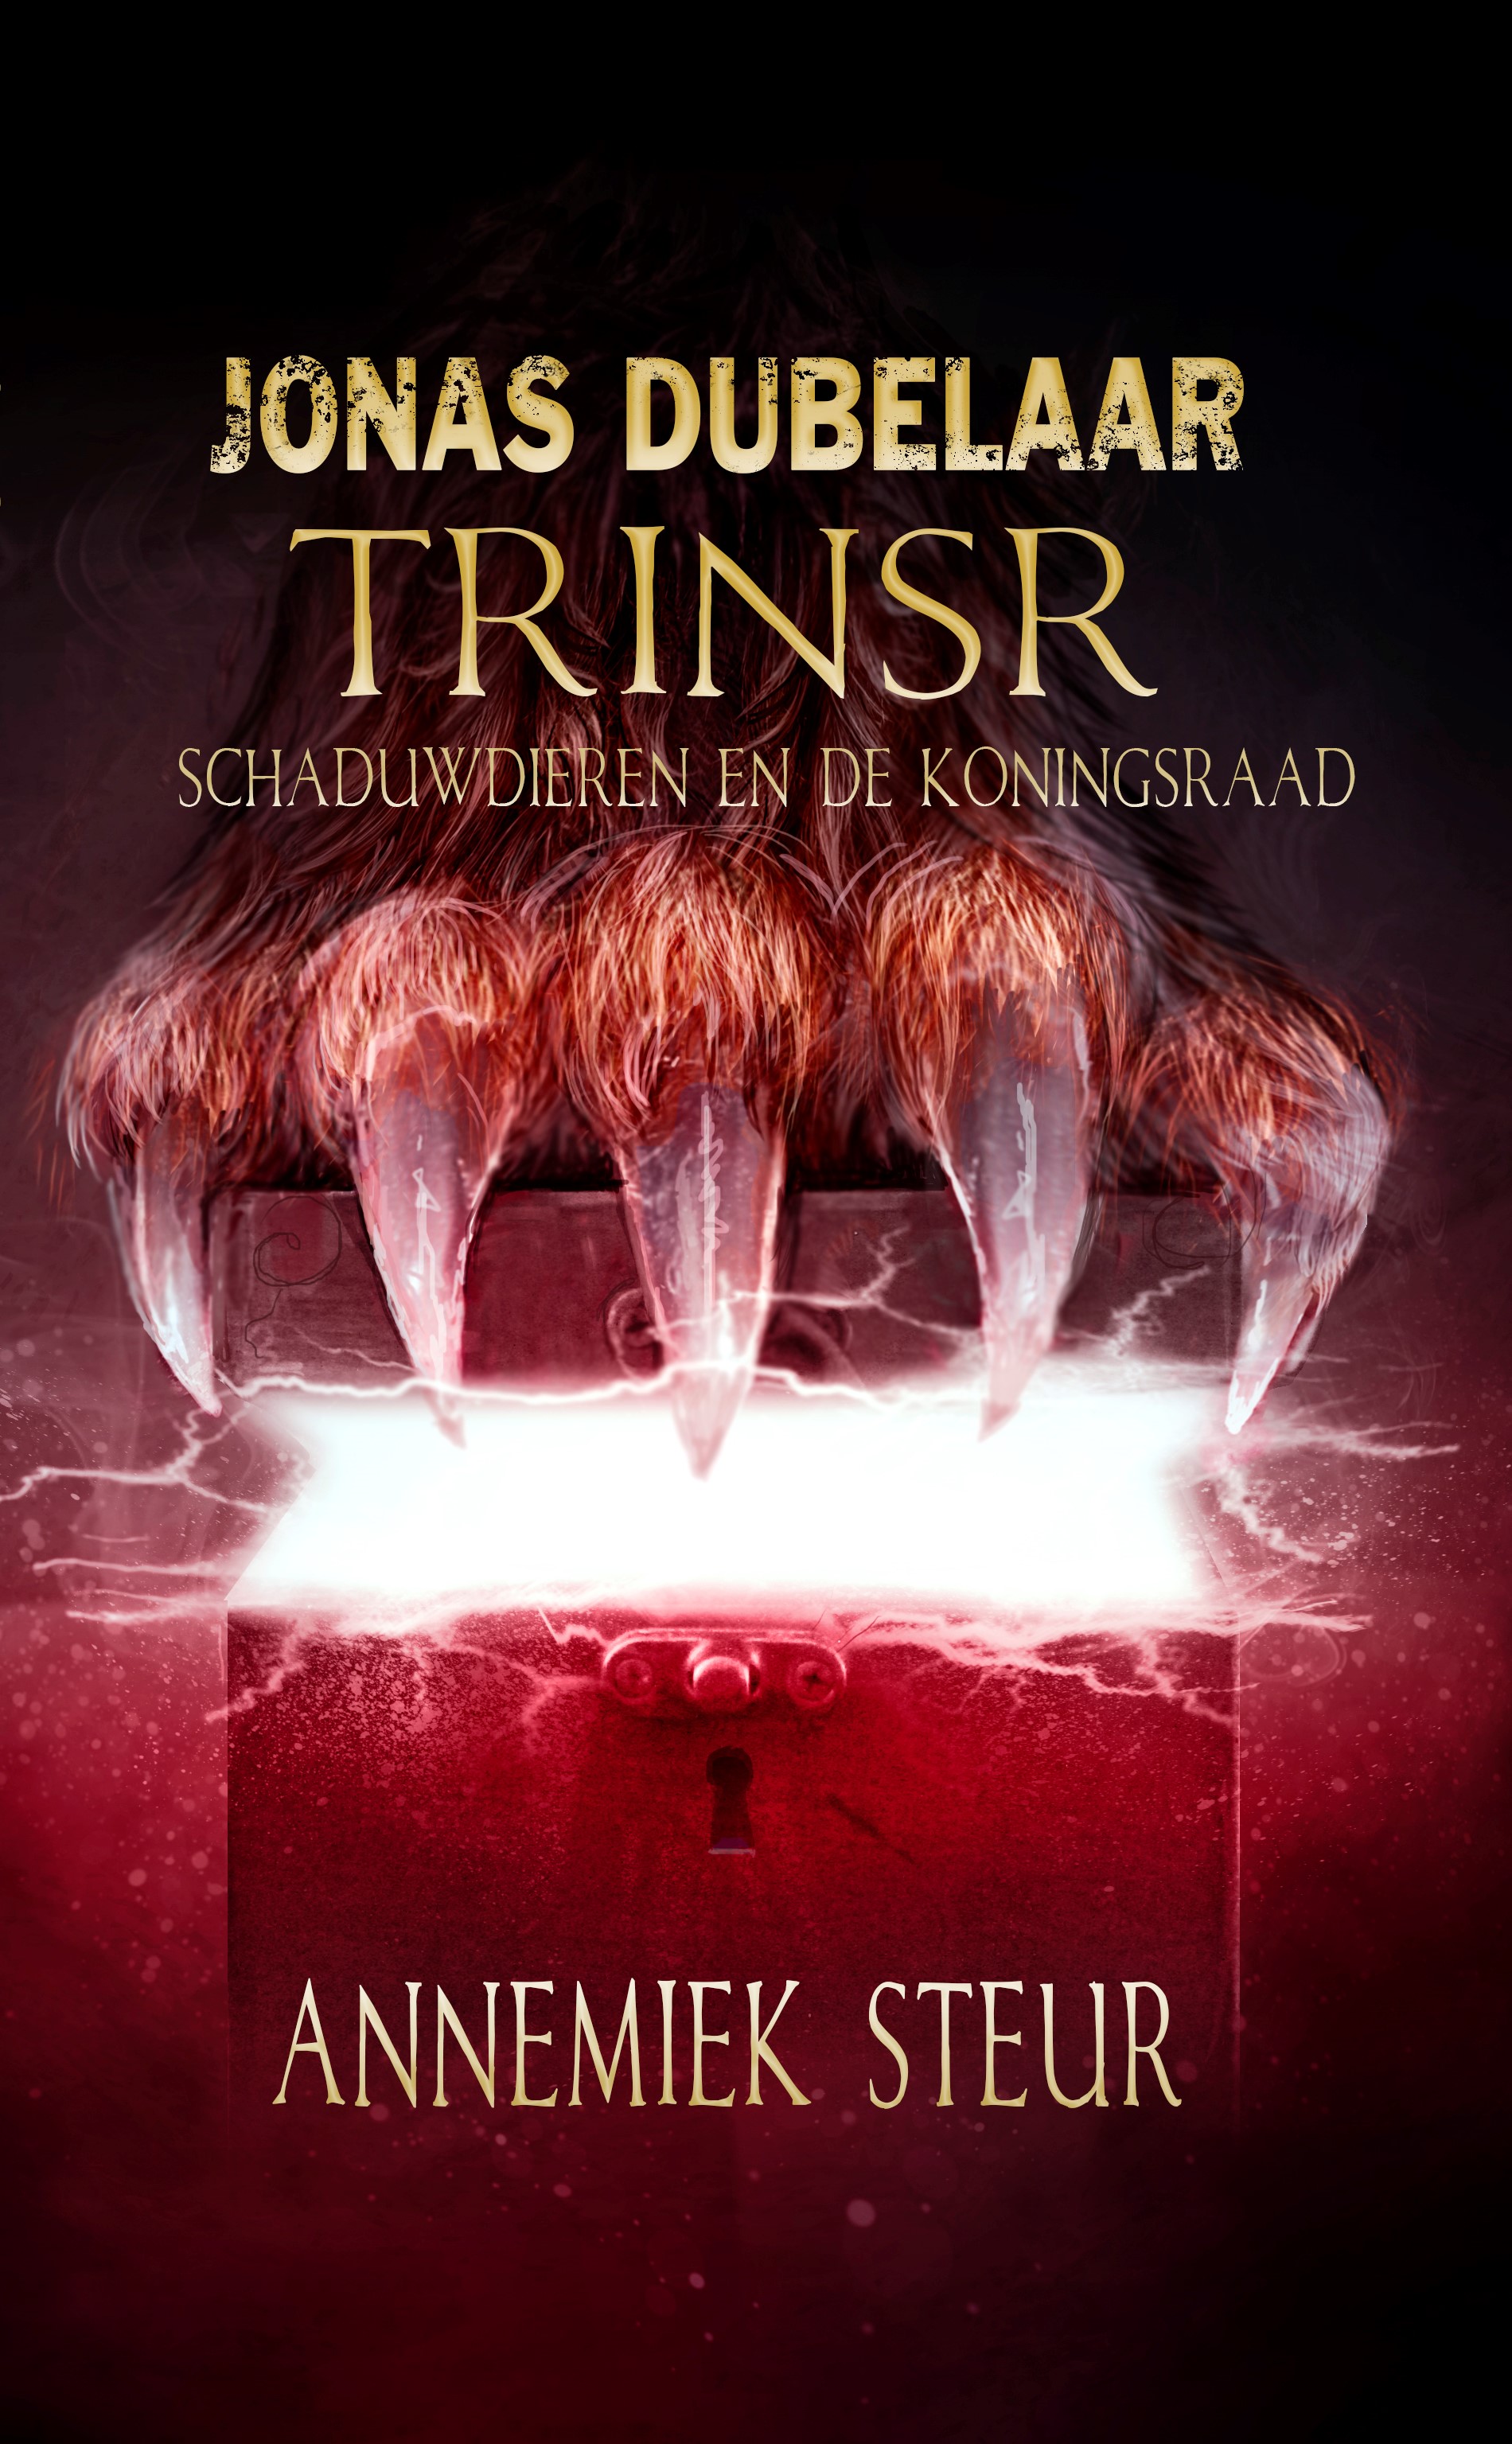 Annemiek Steur: Trinsr, schaduwdieren en de Koningsraad (Hardcover, Dutch language, 2022)